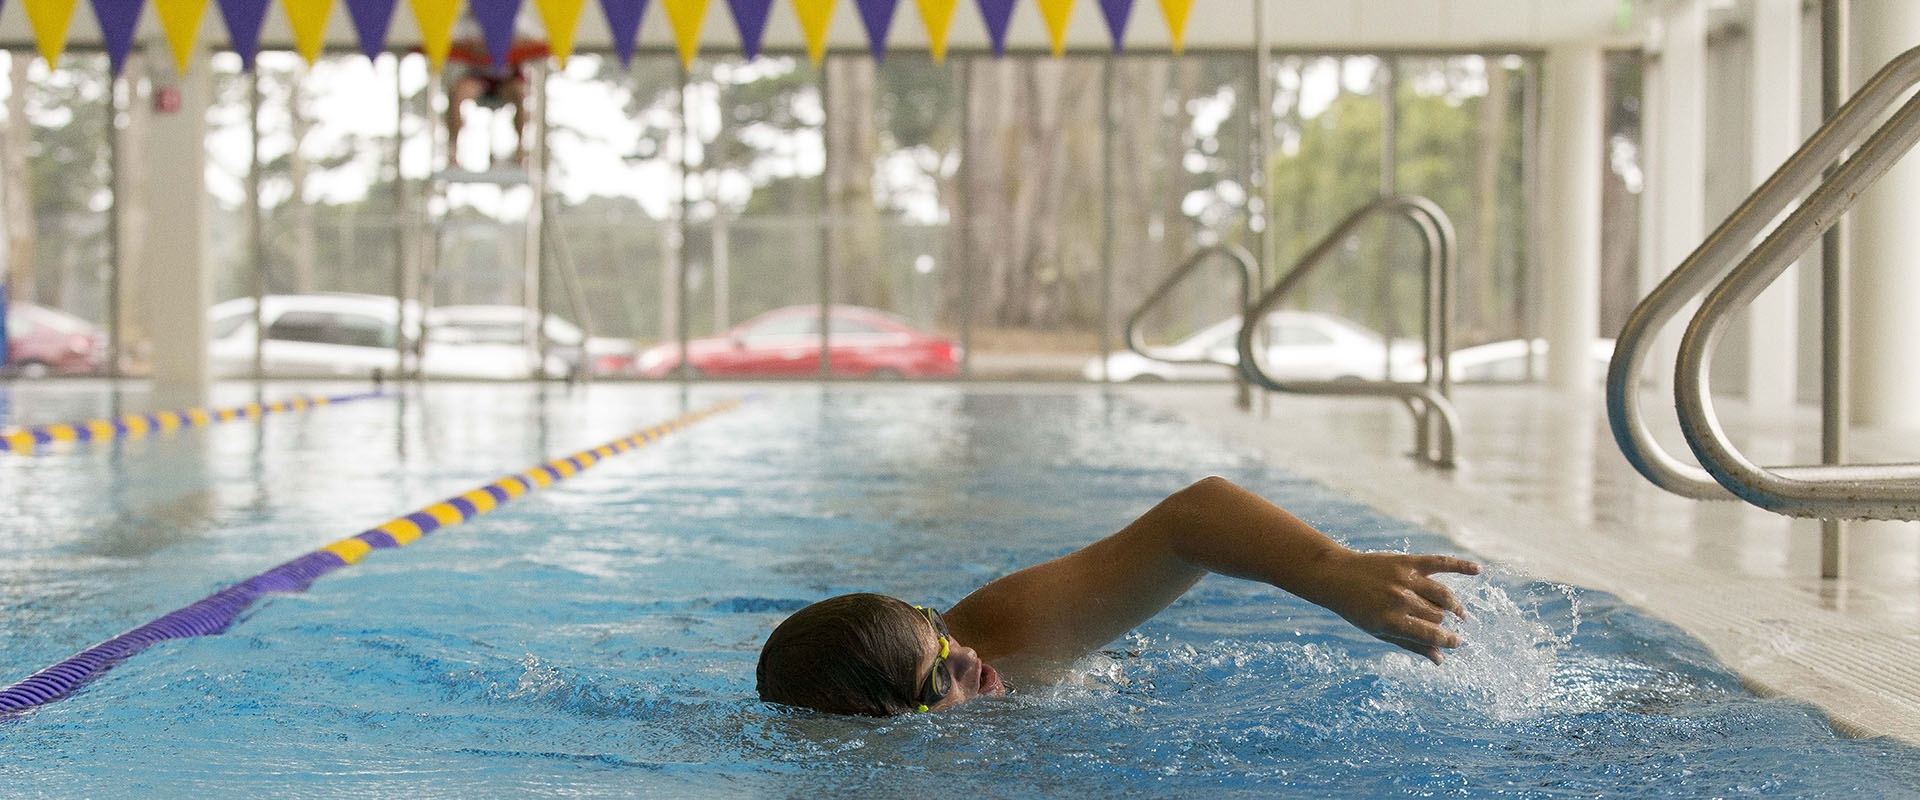 Swimmer in mashouf wellness center